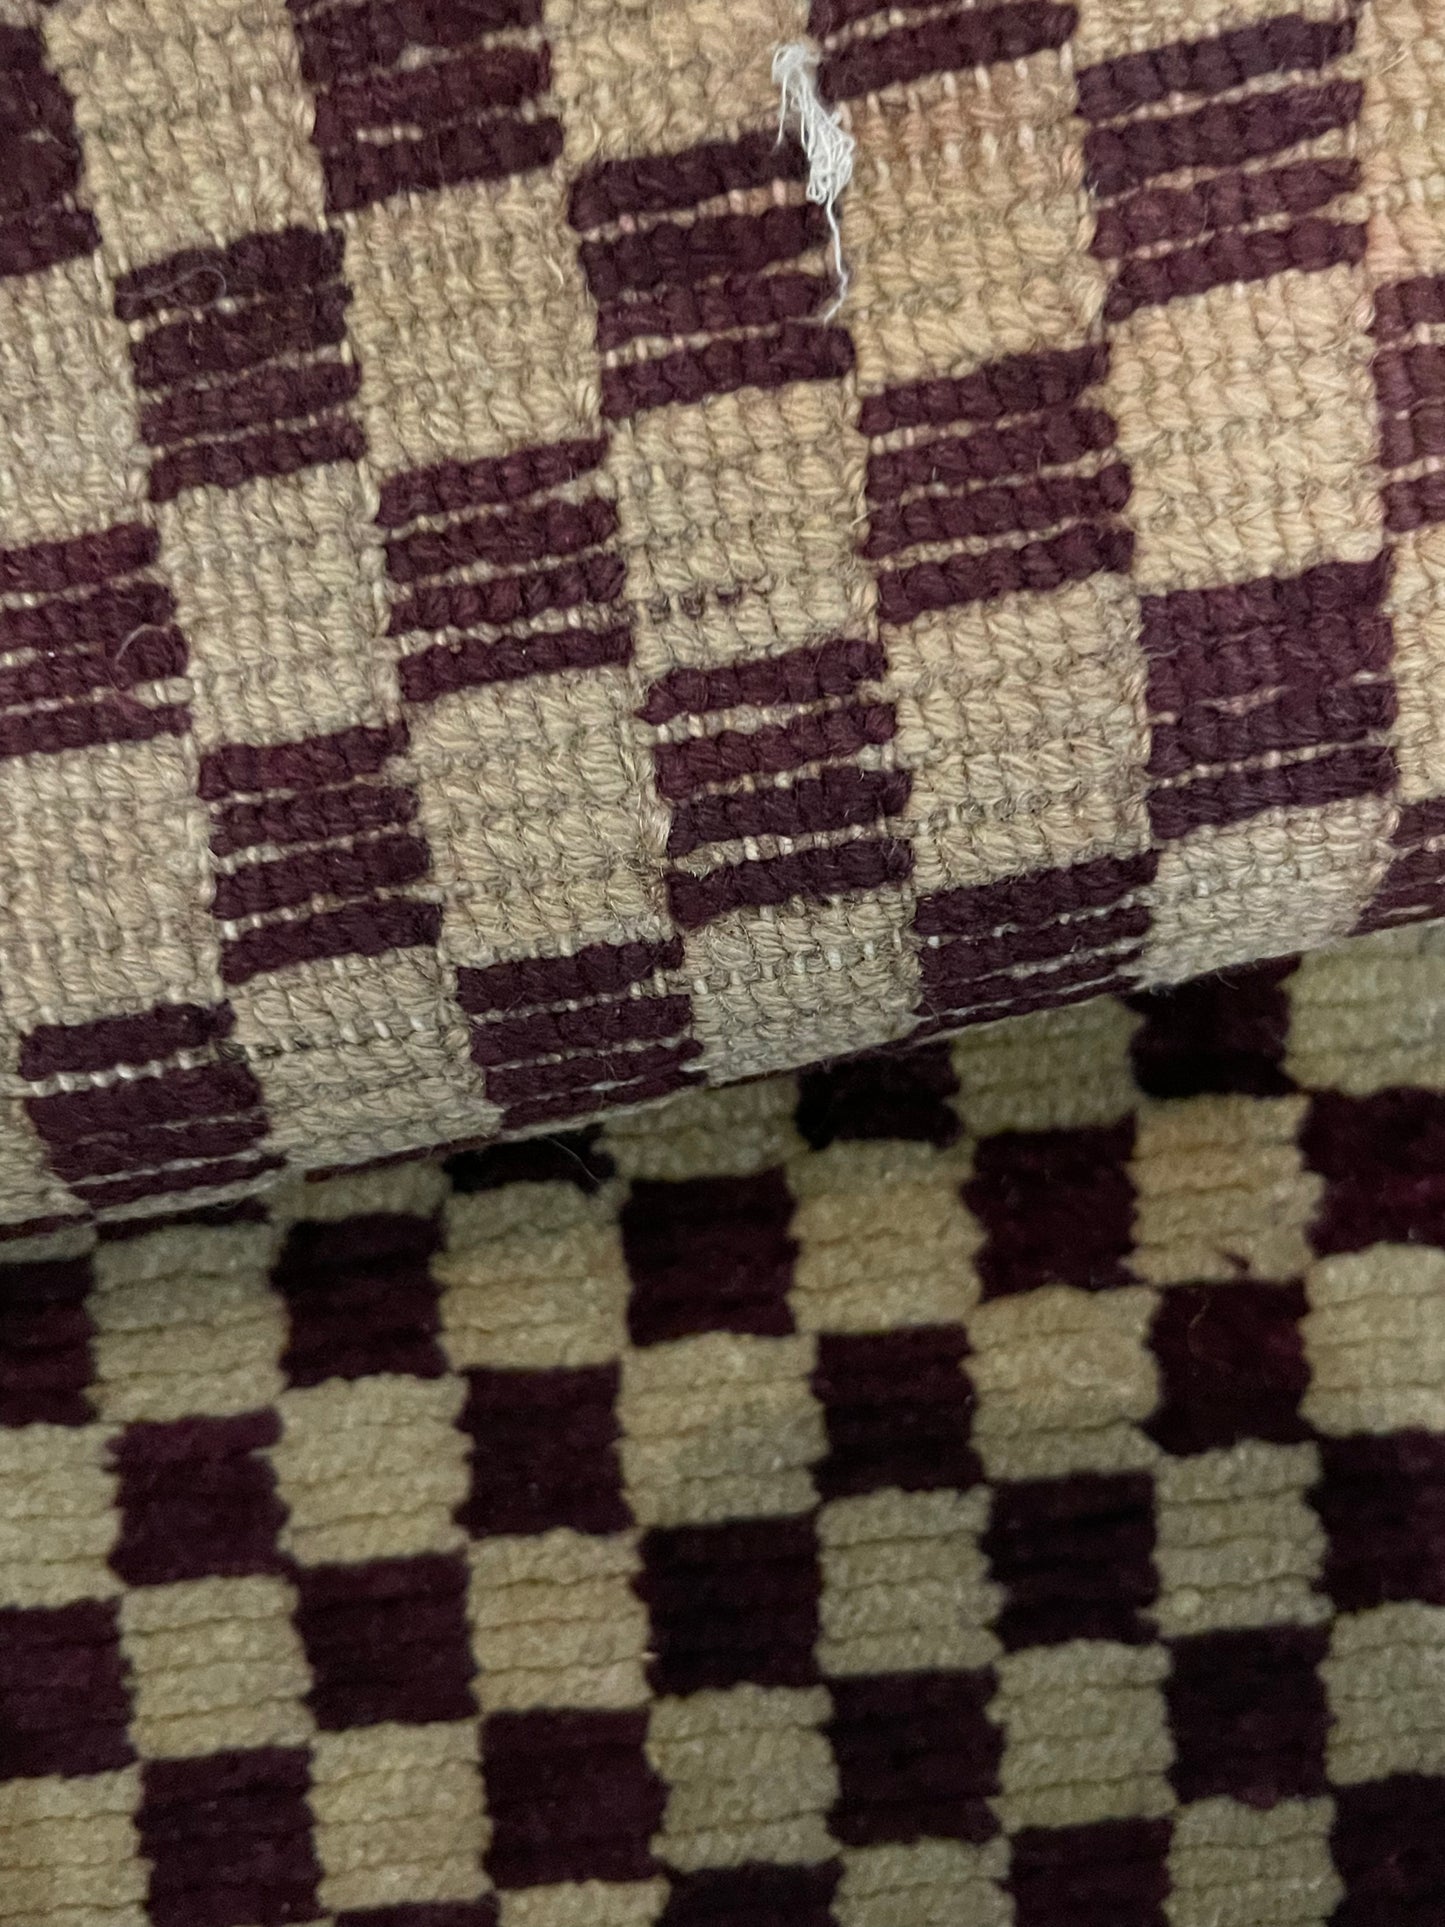 An antique Tibetan checkerboard handmade wool  rug